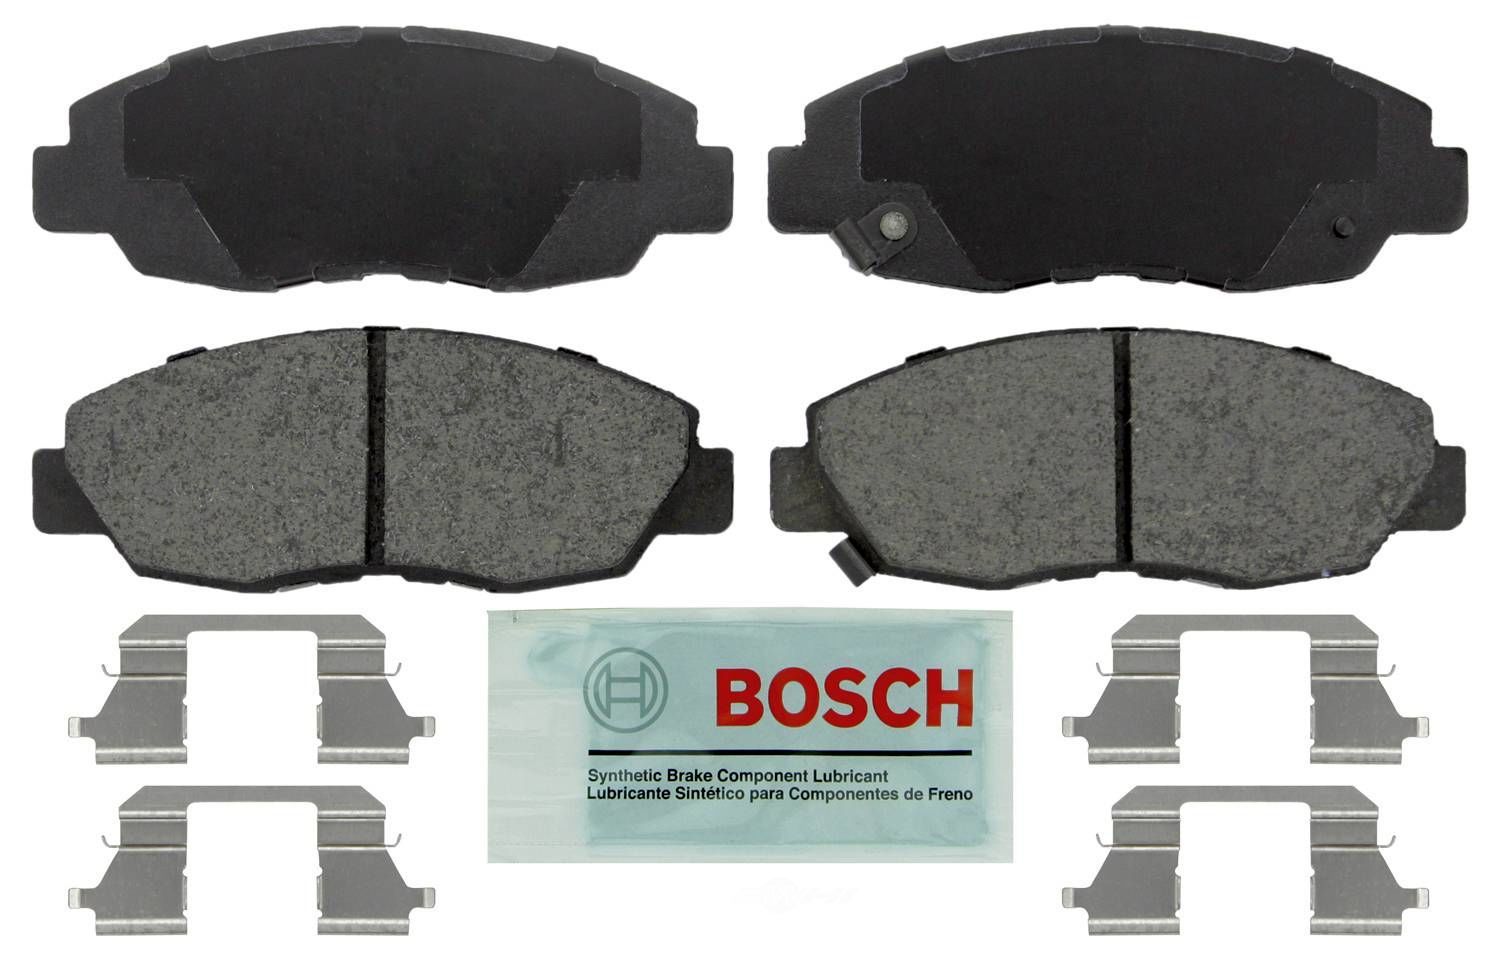 BOSCH BRAKE - Bosch Blue Ceramic Brake Pads with Hardware - BQC BE465AH